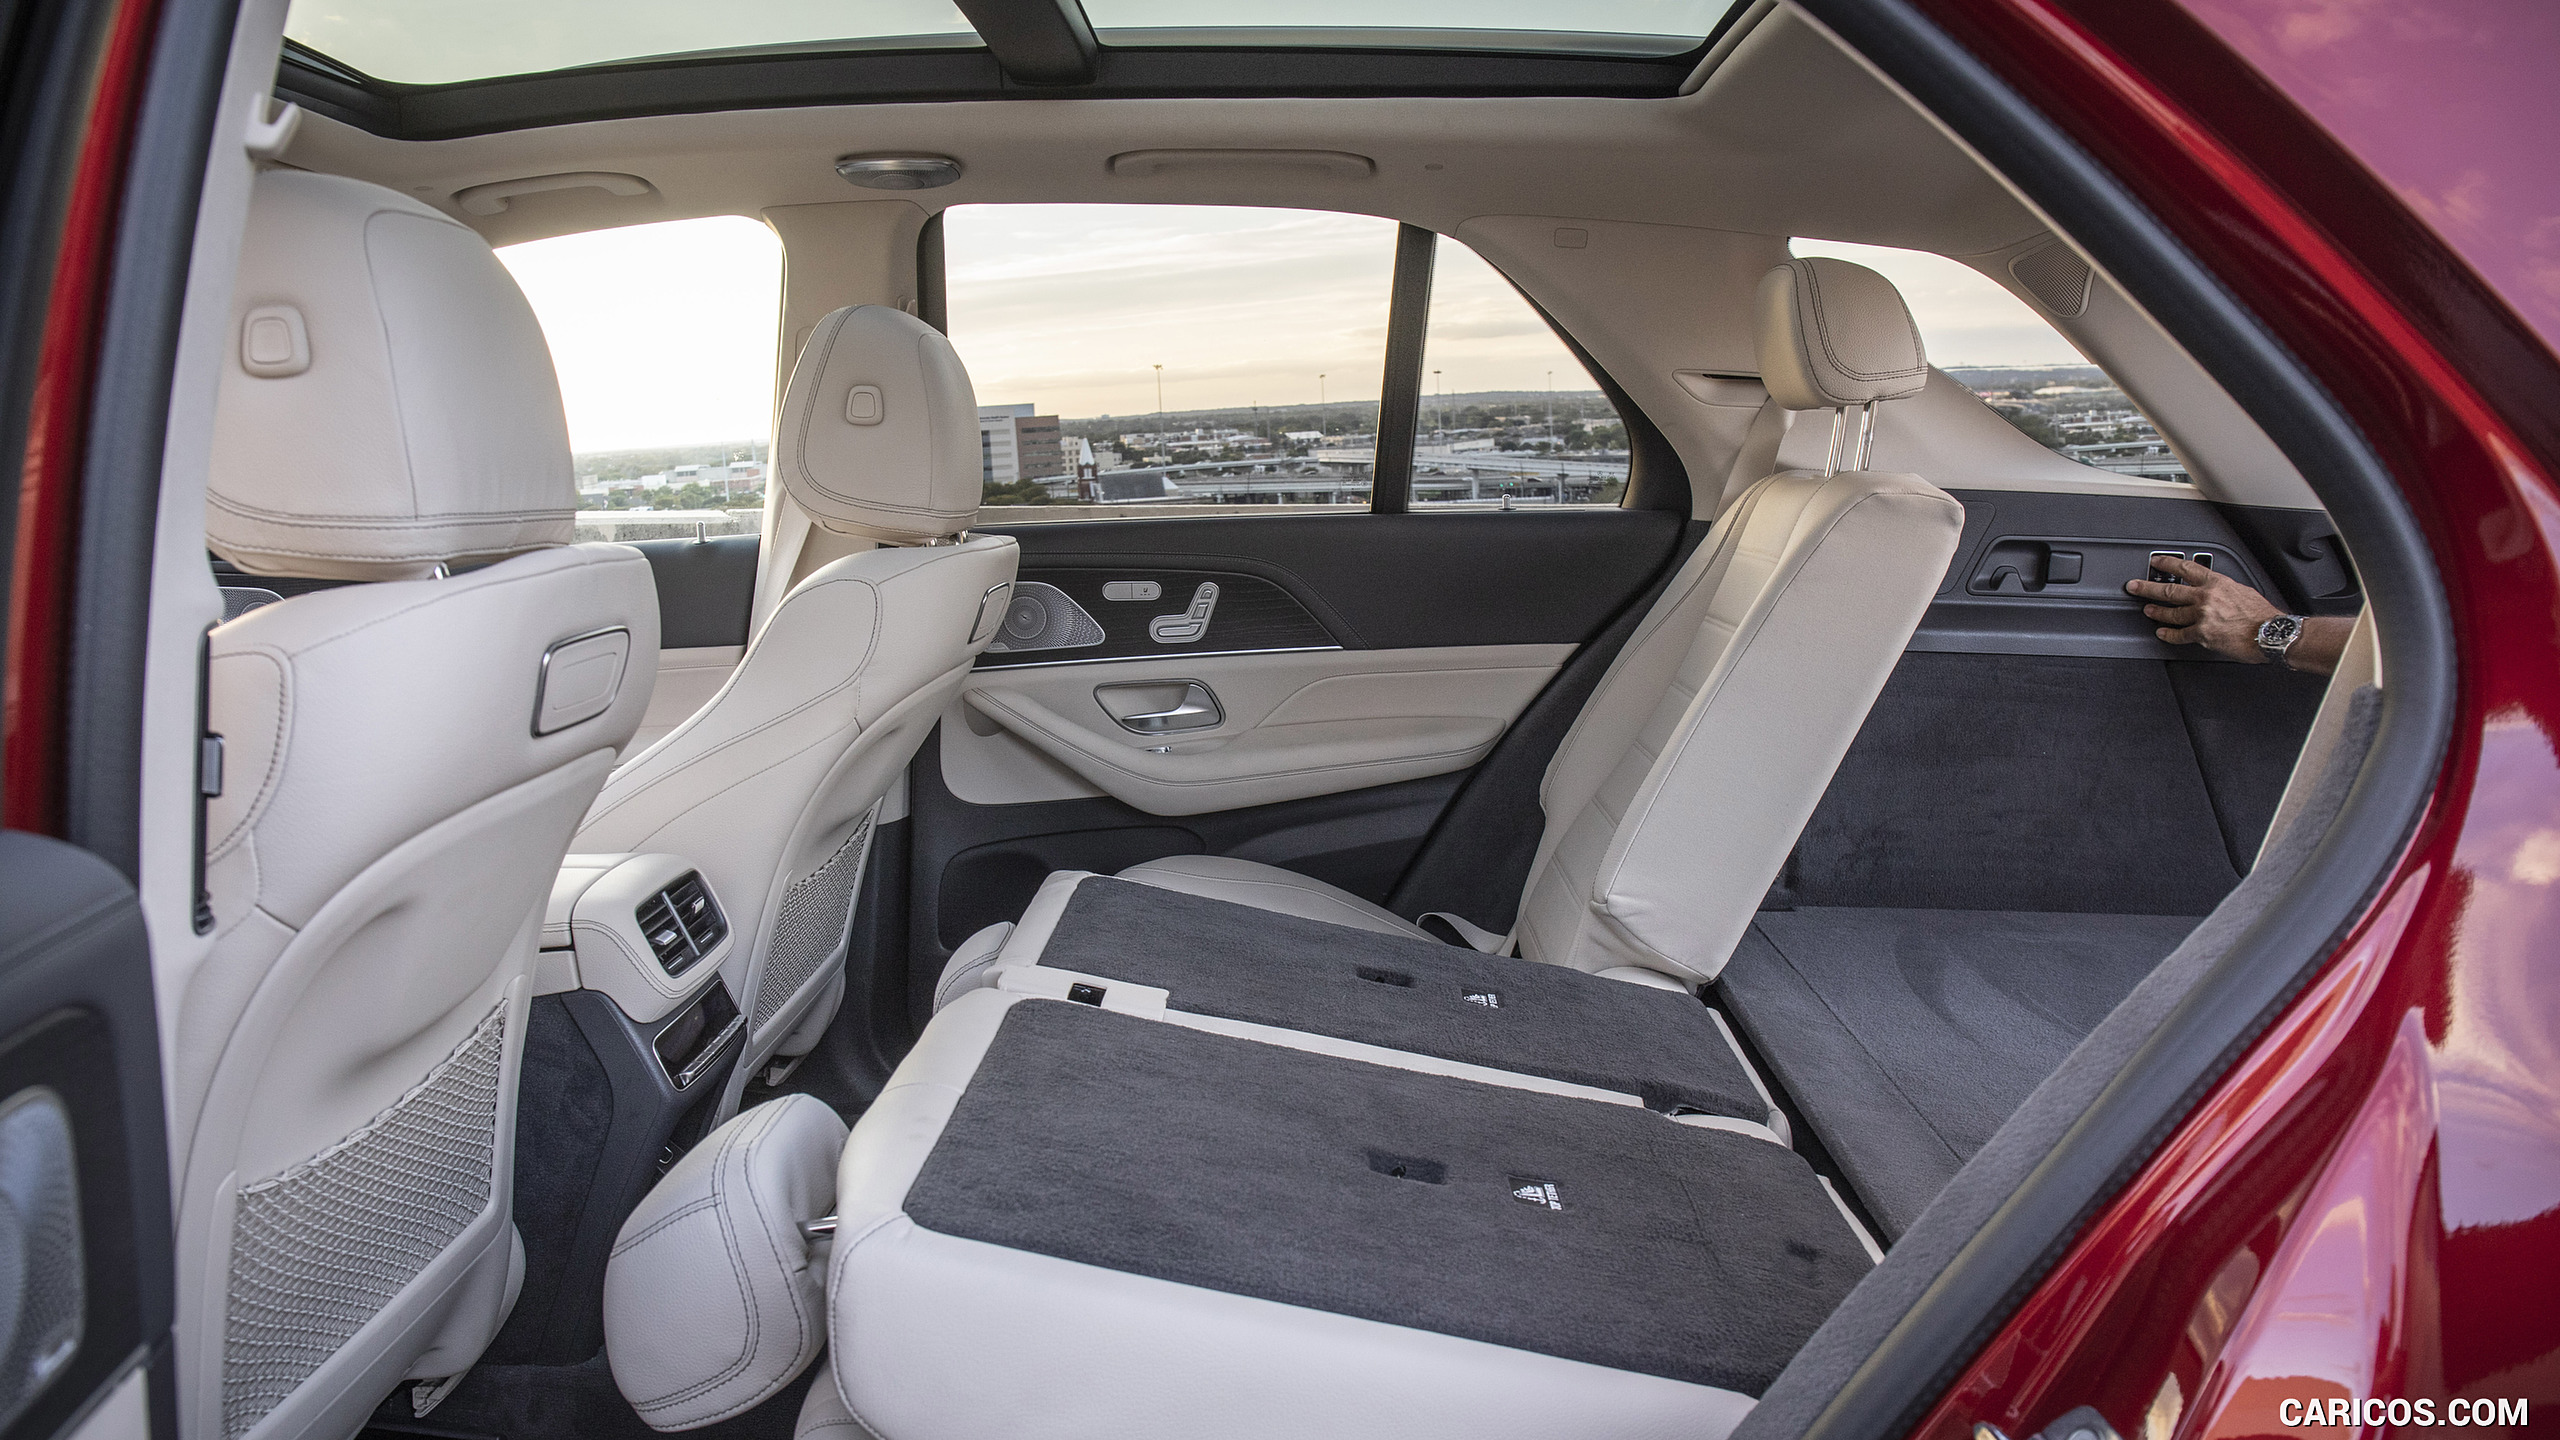 2020 Mercedes-Benz GLE 450 4MATIC (Color: Designo Hyazinth Red Metallic; US-Spec) - Interior, Rear Seats, #340 of 358